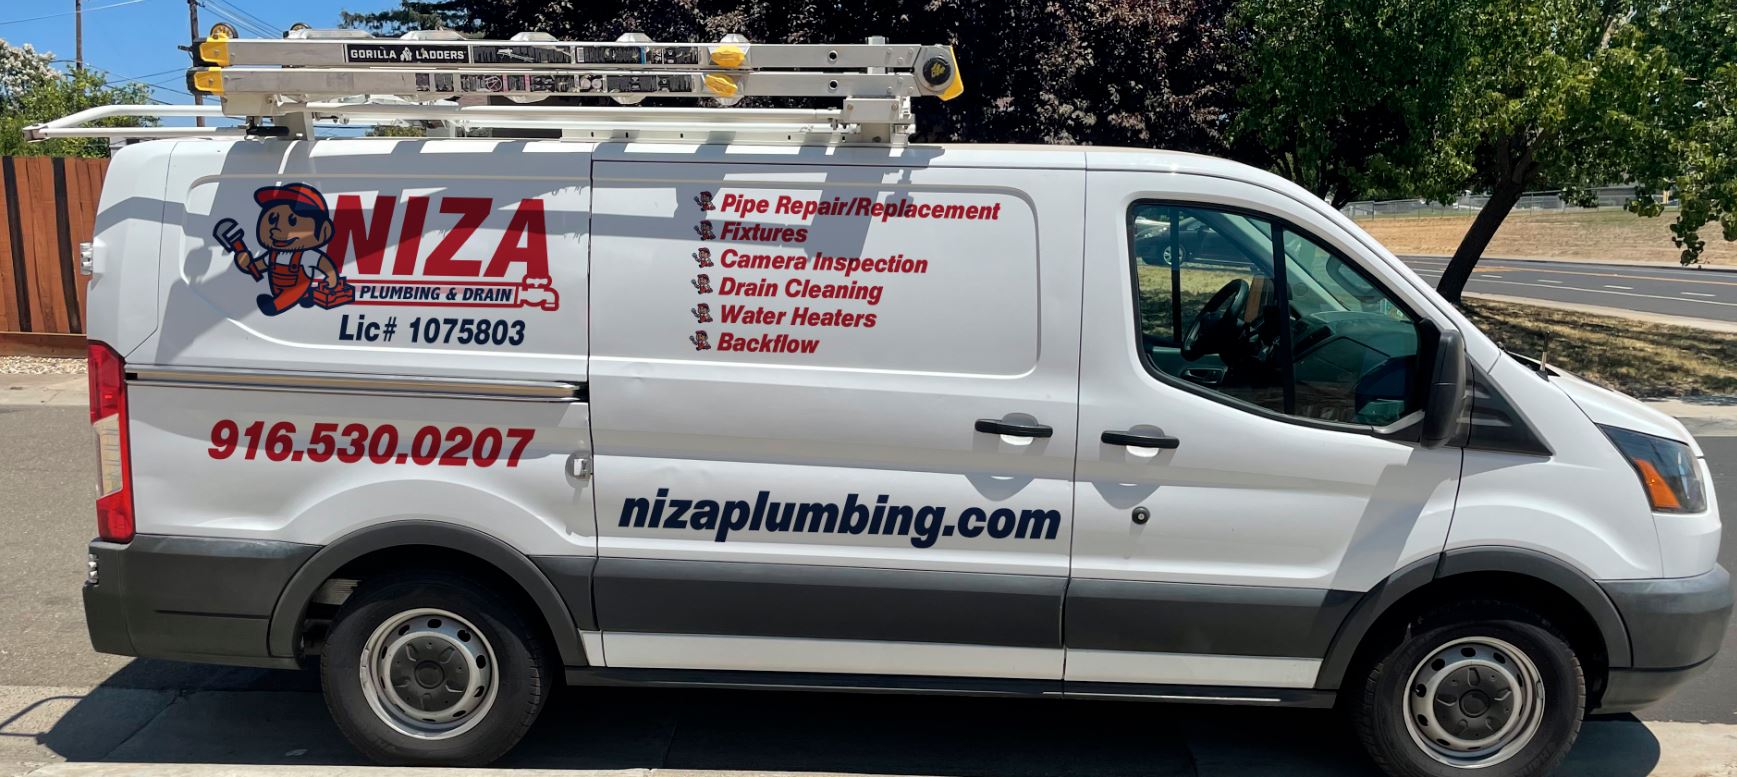 Niza Plumbing and Drain Service Van